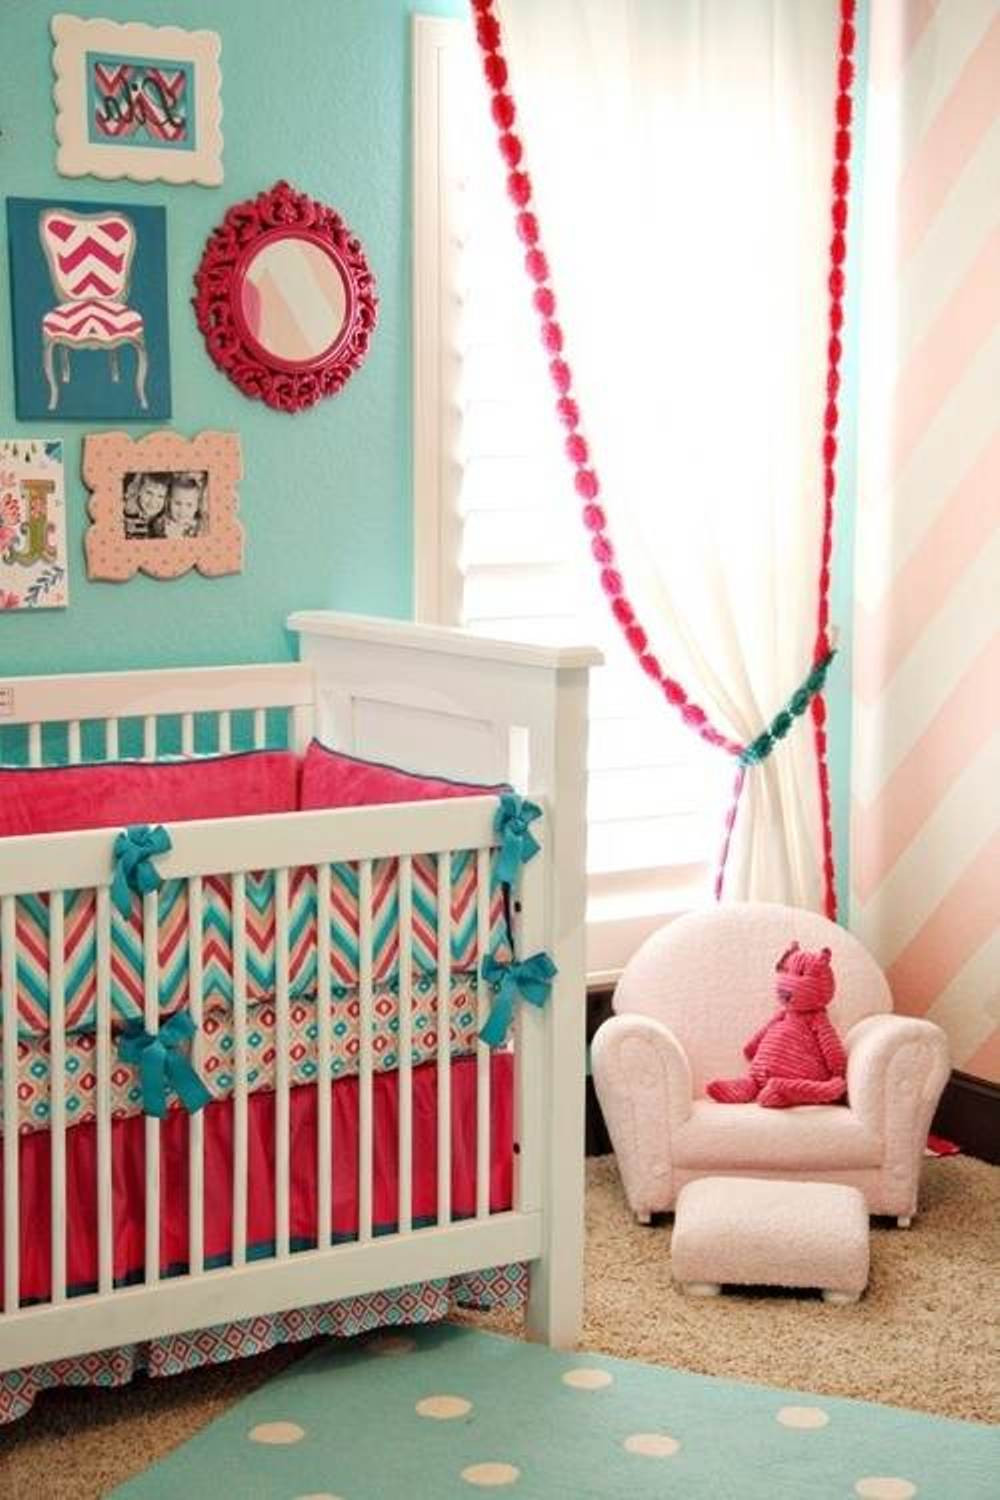 Baby Bedroom Decoration
 25 Baby Bedroom Design Ideas For Your Cutie Pie